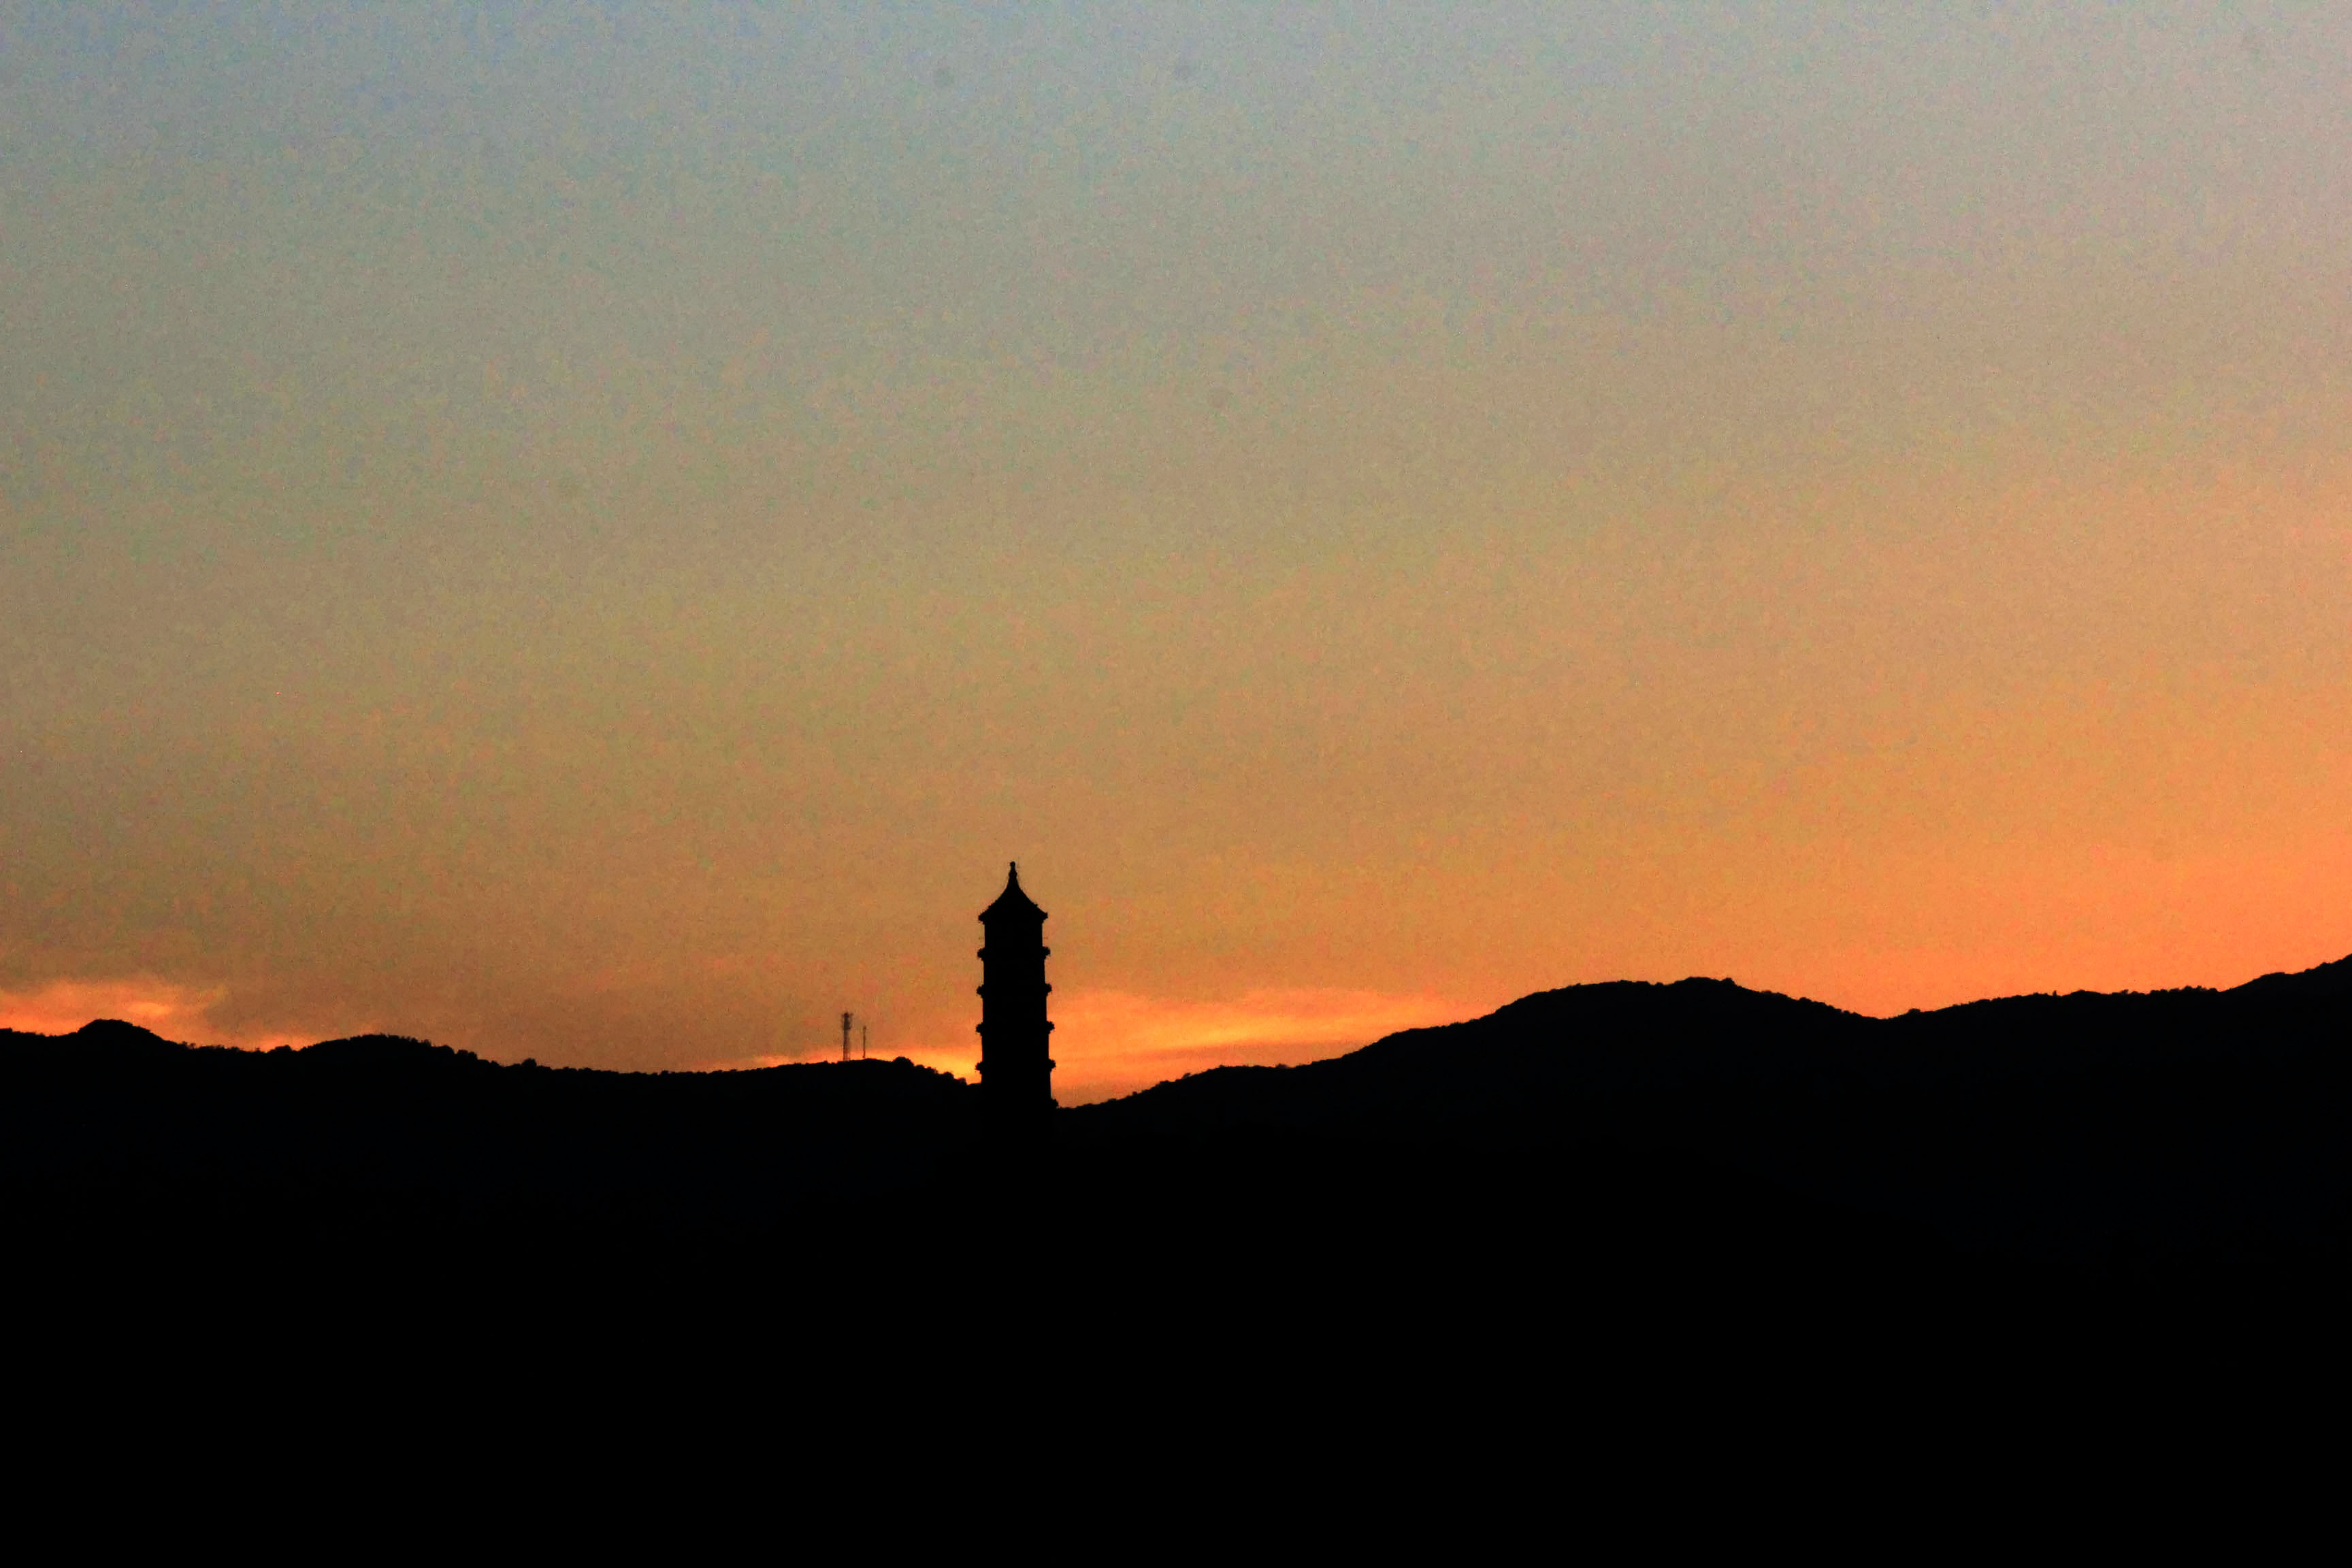 Sunset Pagoda